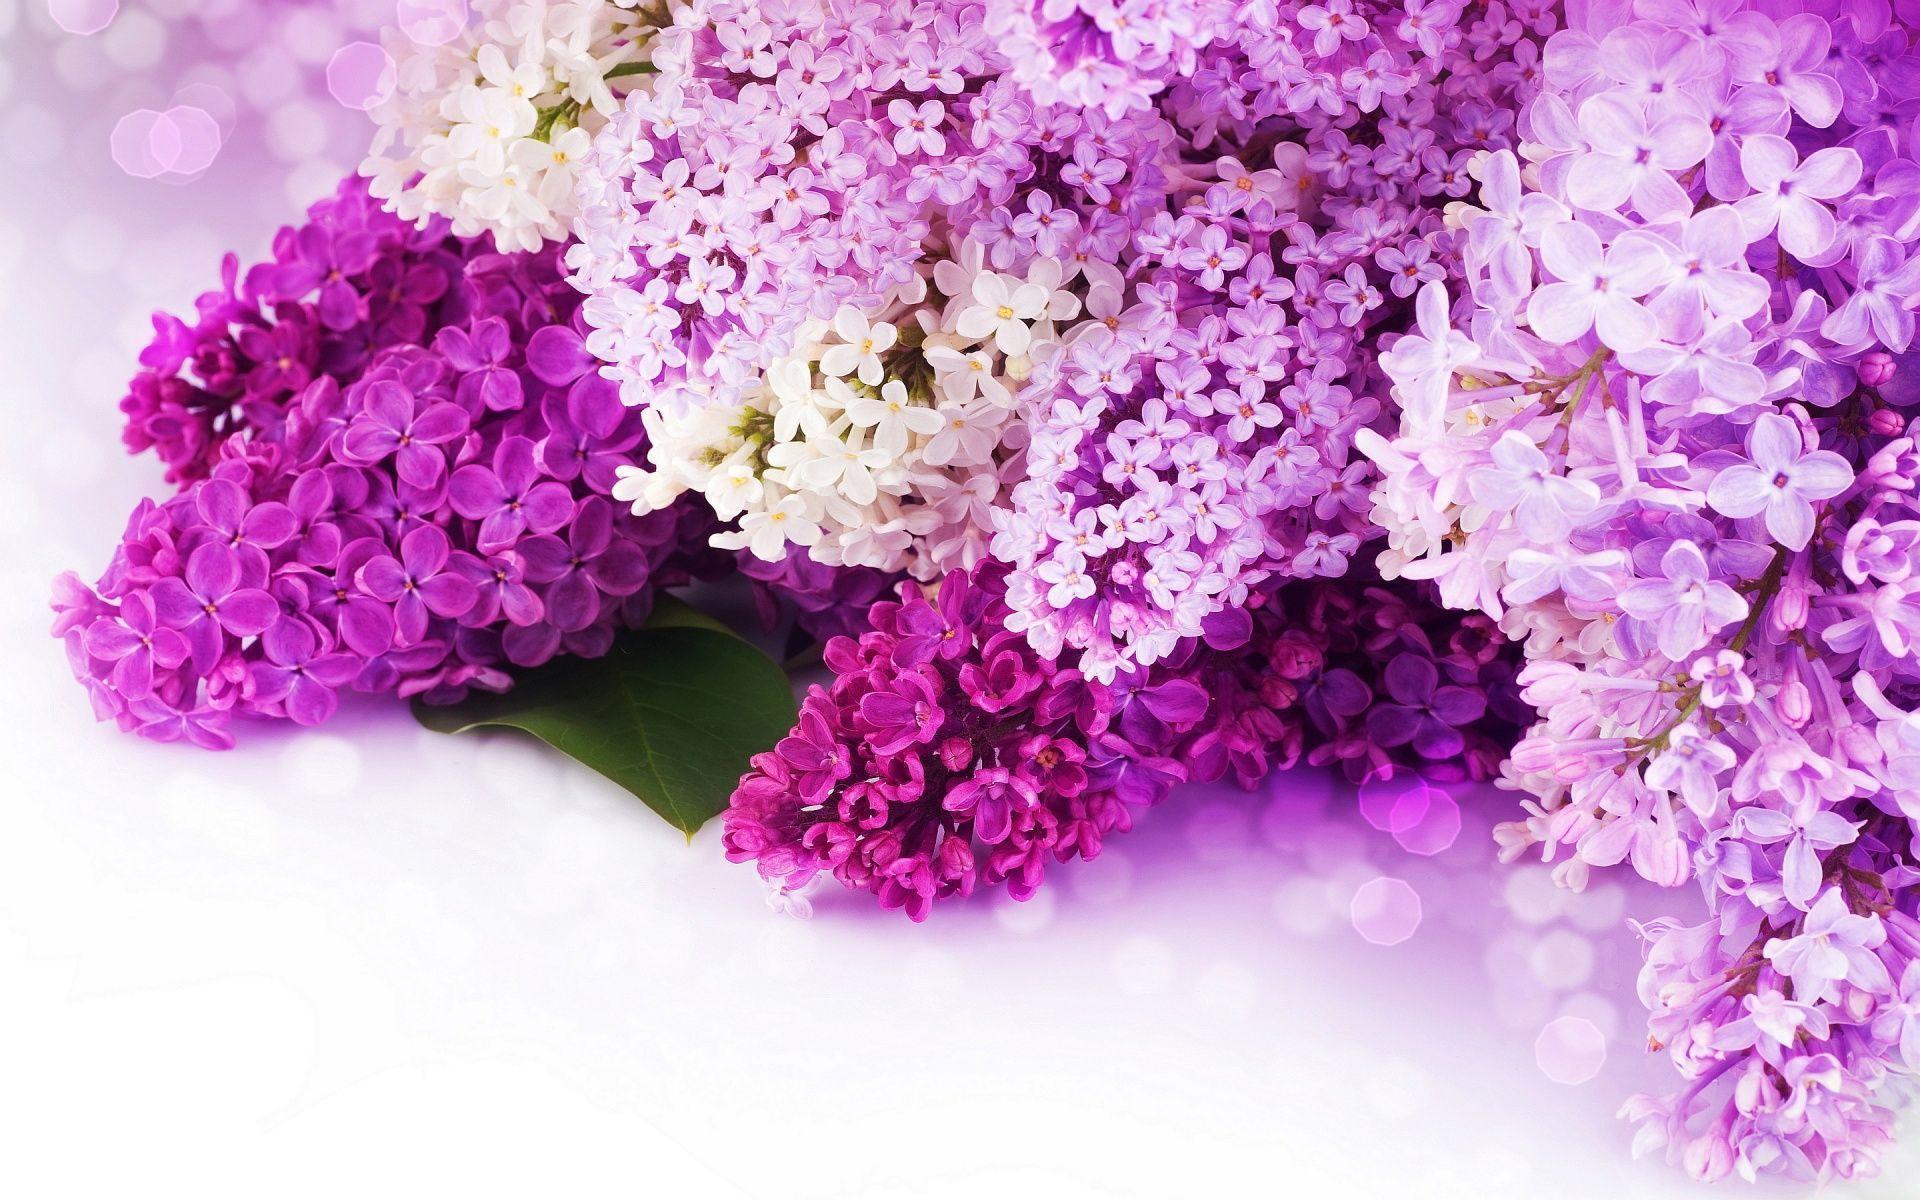 Beautiful Purple Flowers Background Image. Free Download